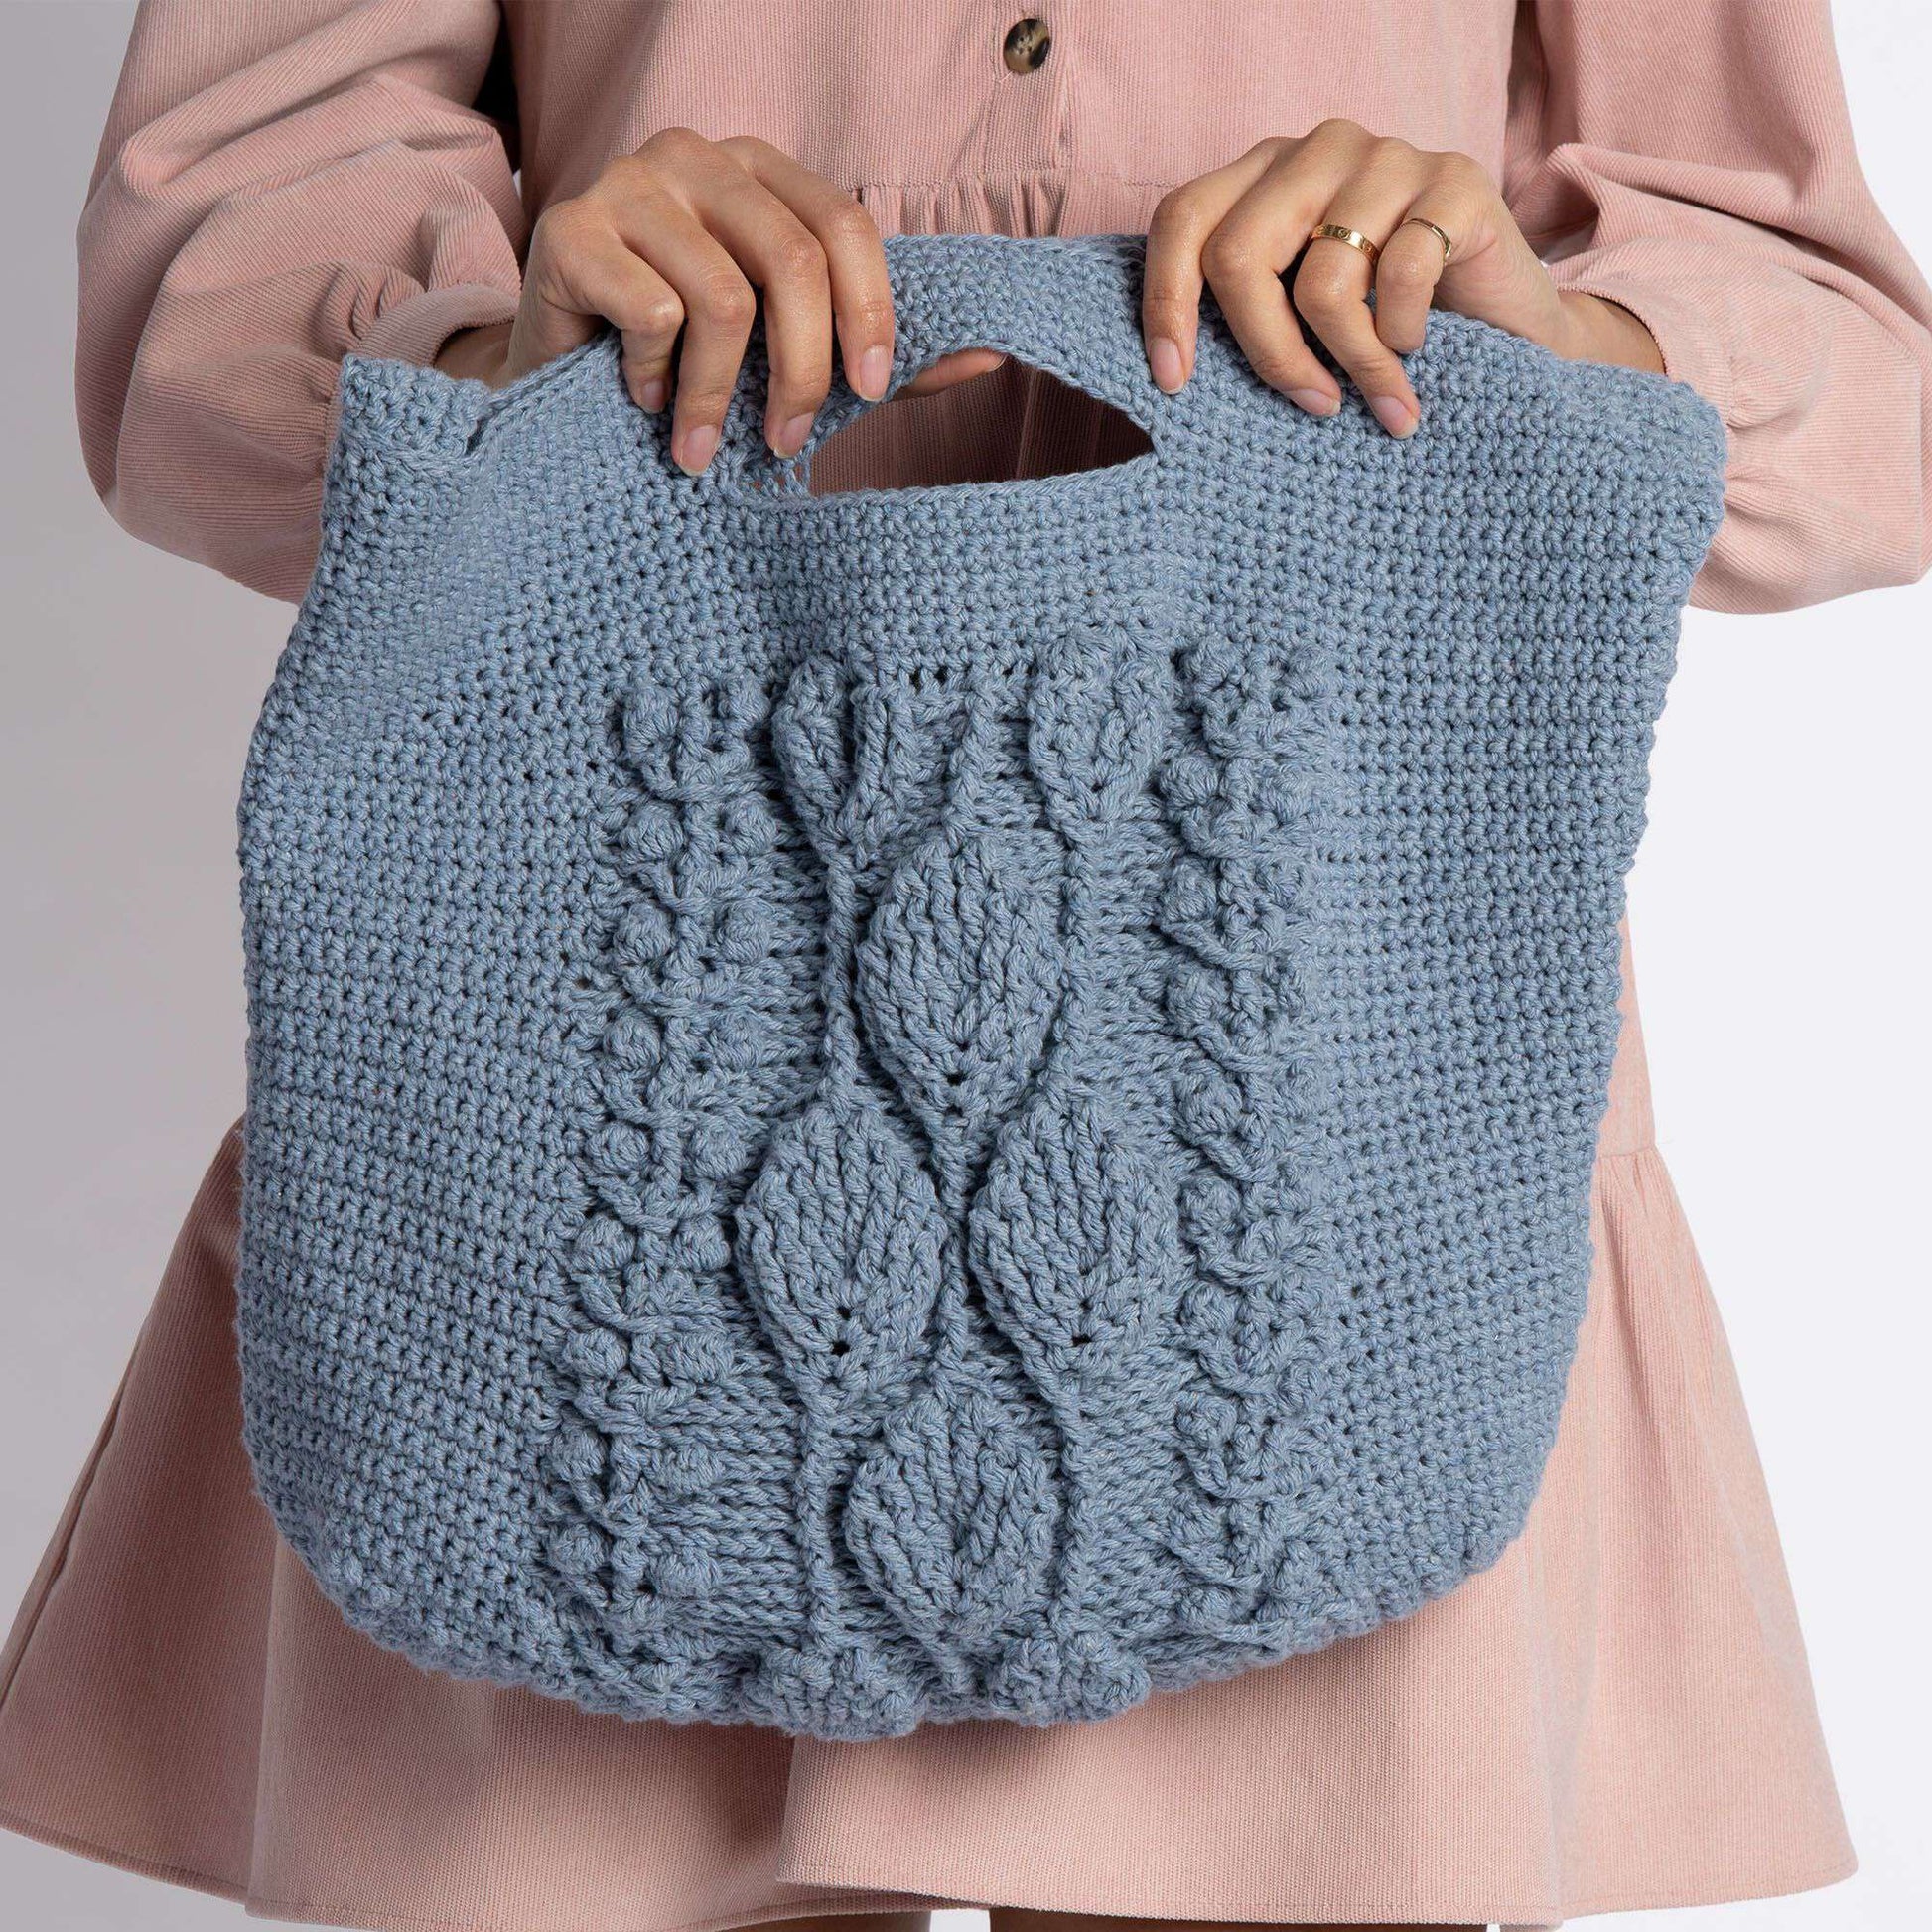 Knitting Tote Bag Supplies Crocheting Bag for Crochet Hook Yarn